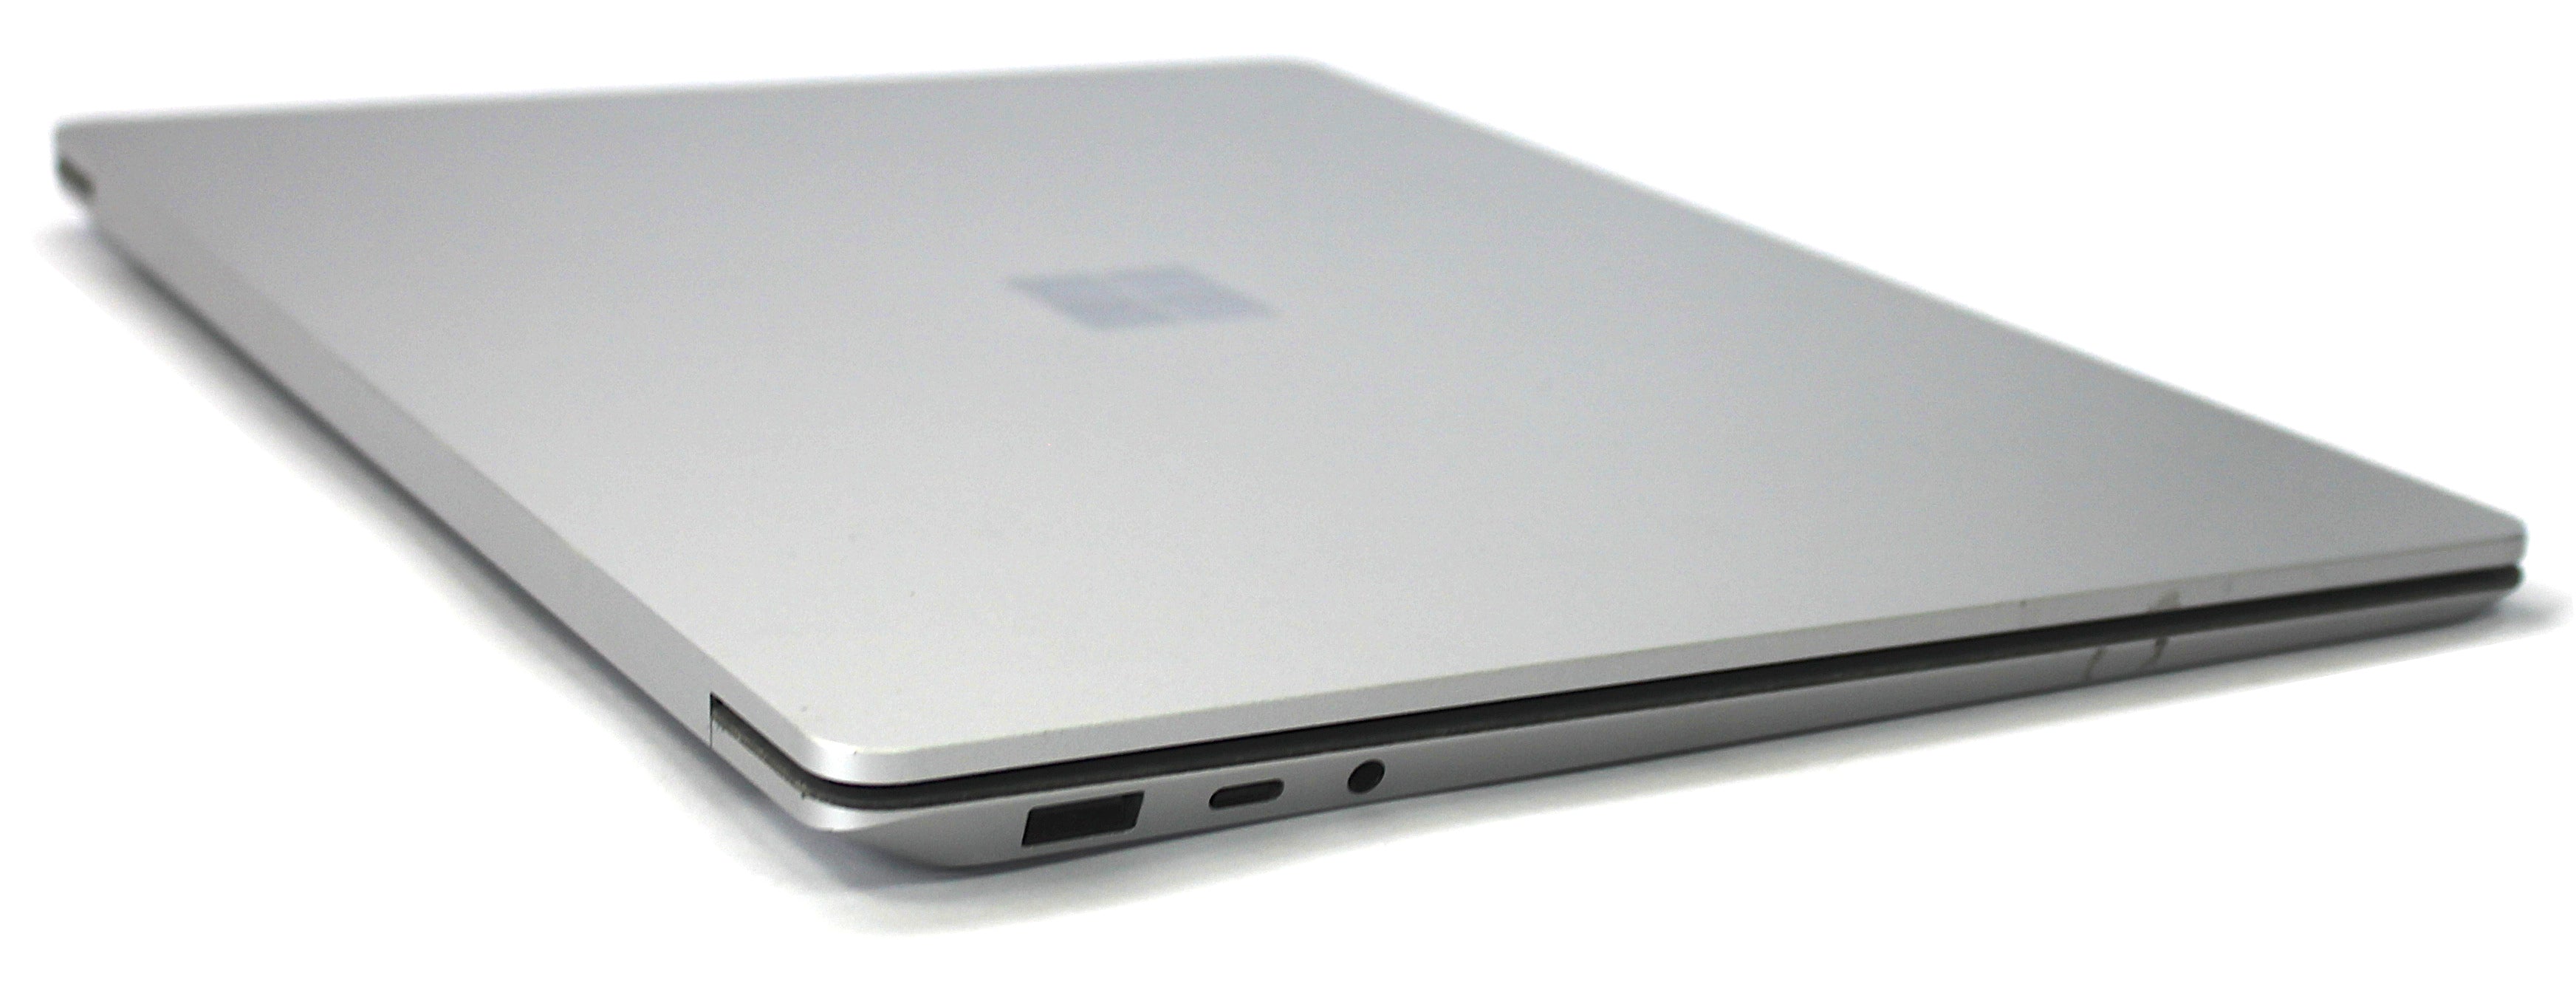 Microsoft Surface 3 Laptop, 13" 10th Gen Core i7, 16GB RAM, 256GB SSD